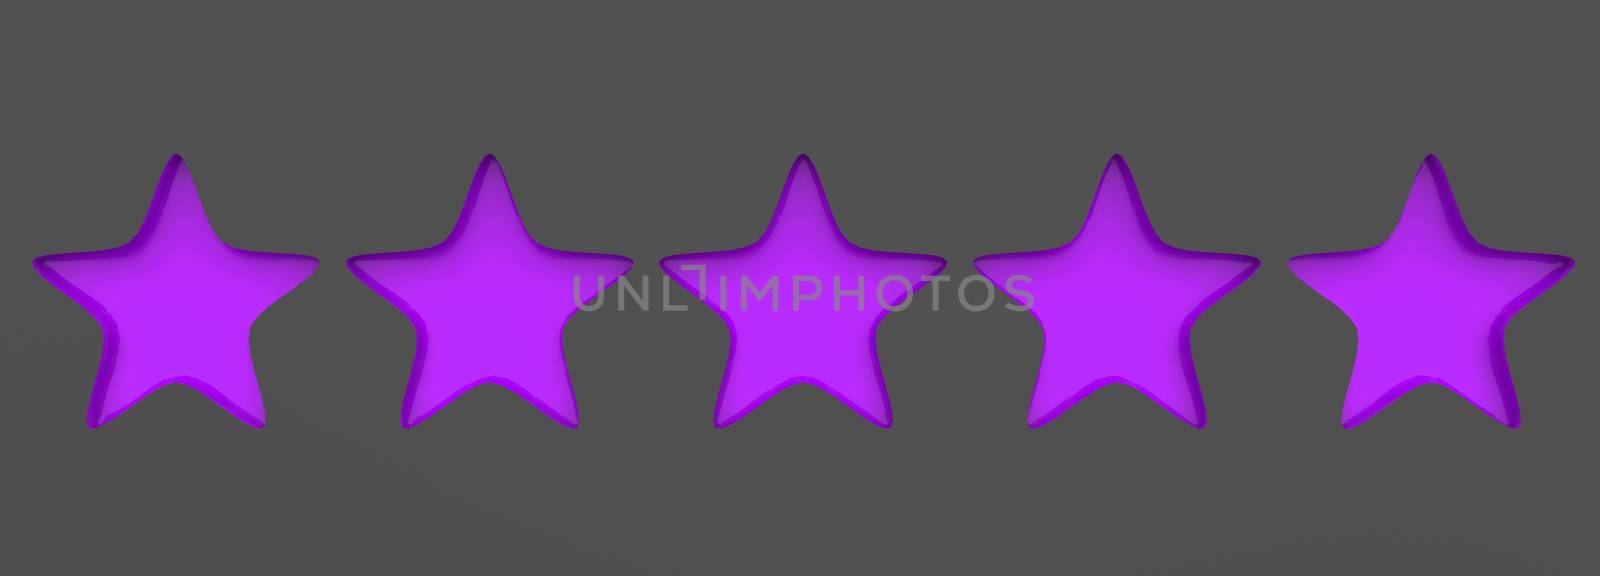 3d five violet star on color background. Render and illustration of golden star for premium review by Andreajk3